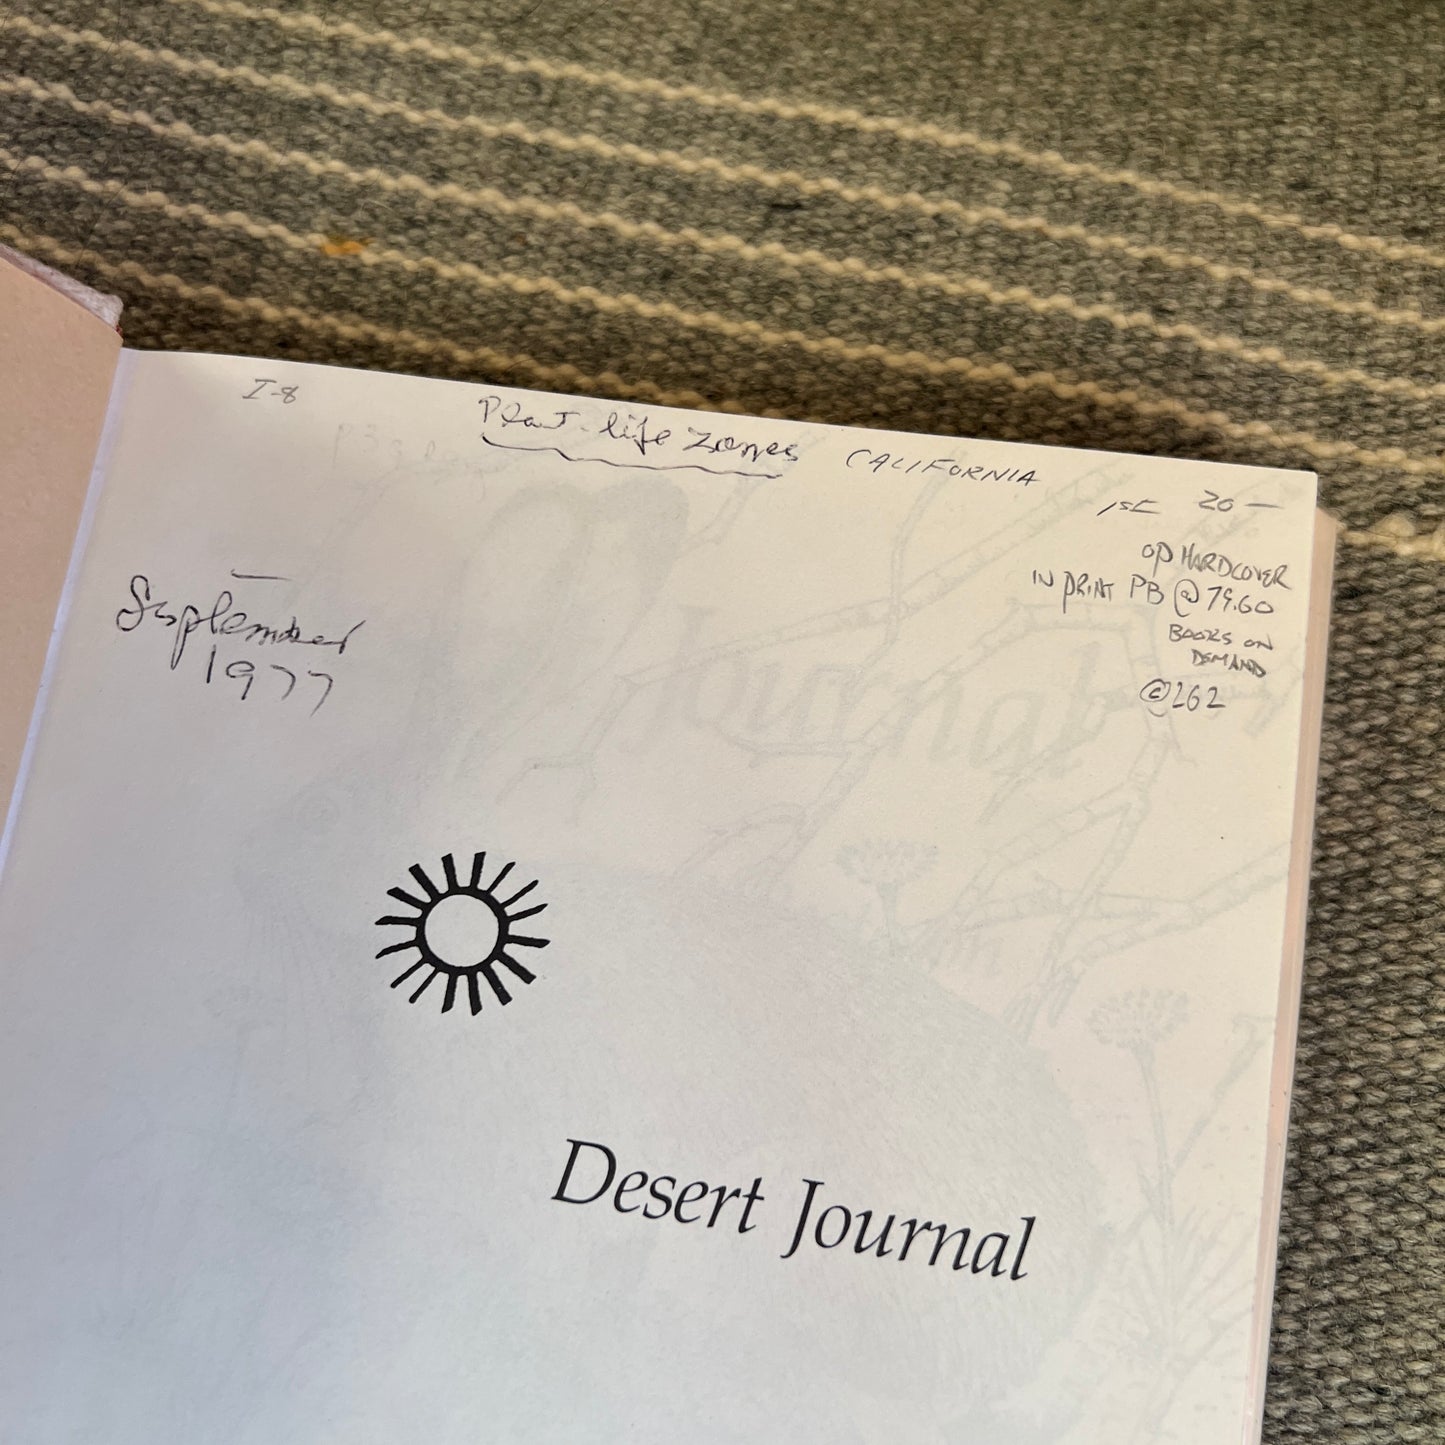 Desert Journal: A Naturalist Reflects on Arid California by Raymond Cowles